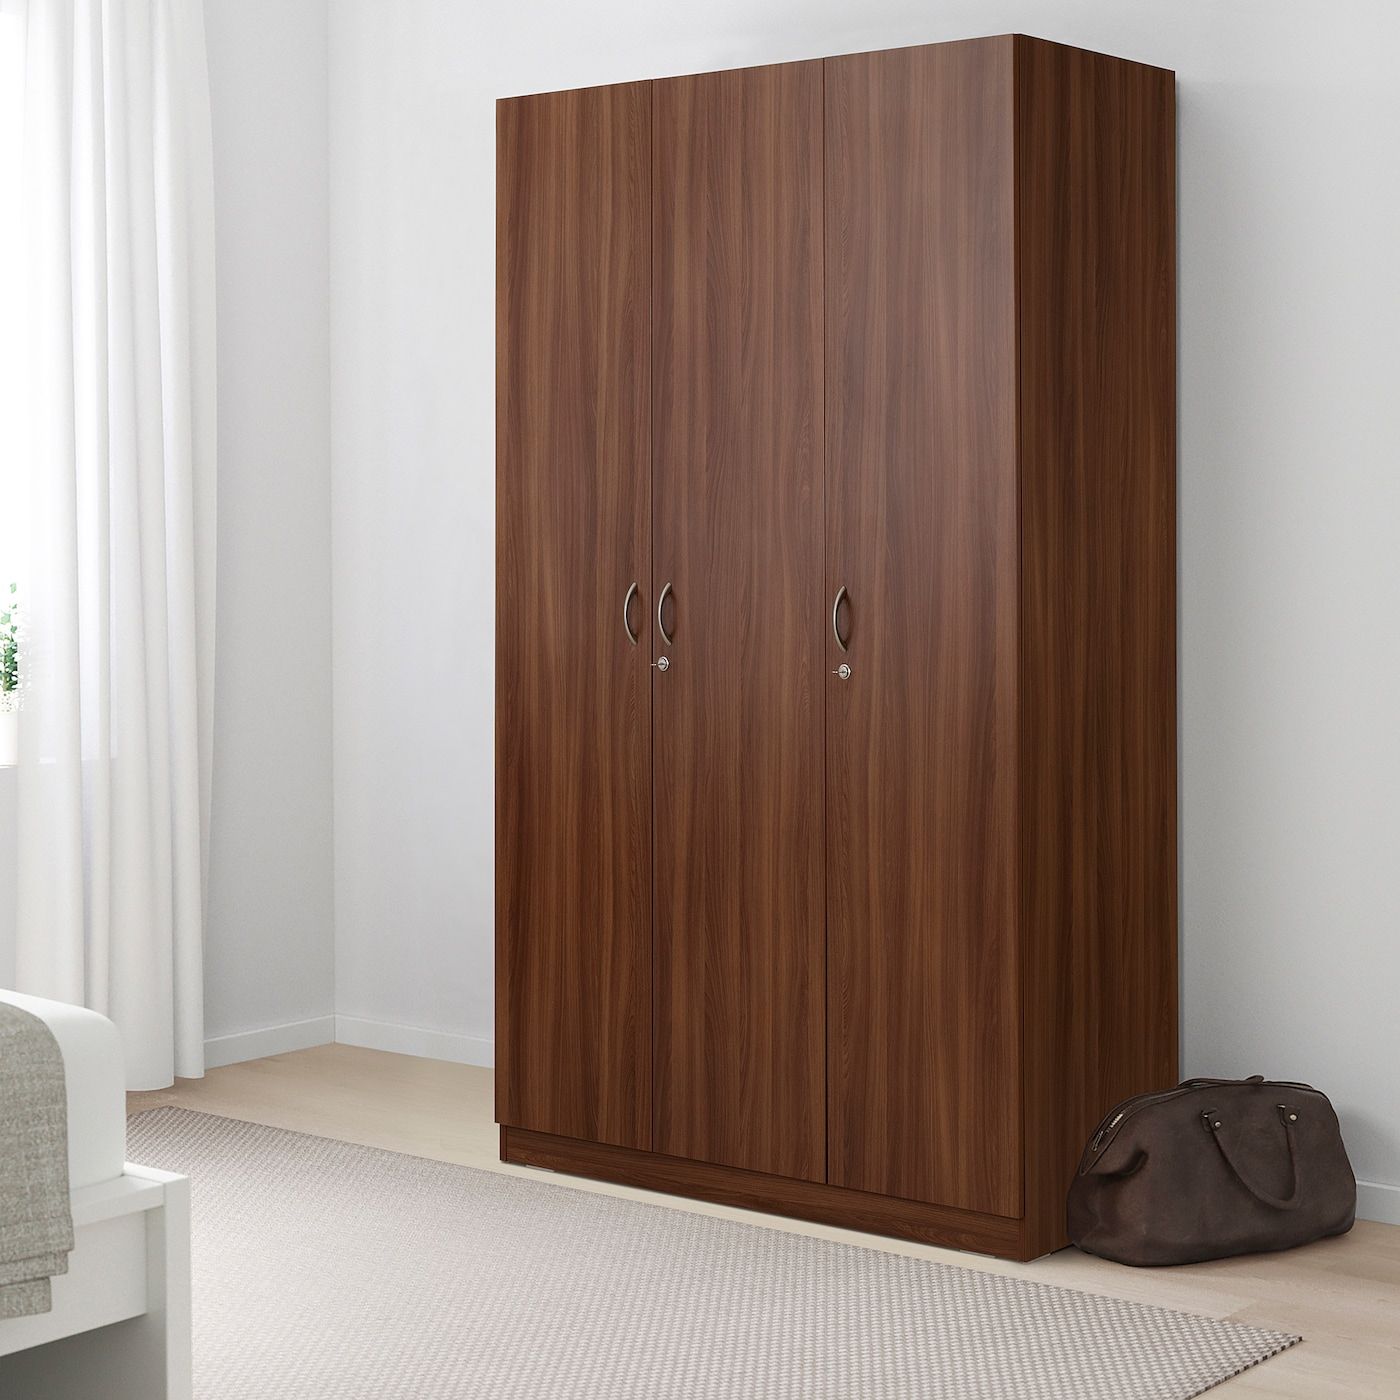 Nodeland Wardrobe With 3 Doors, Medium Brown, 120x52x202 Cm  (471/4x203/8x791/2") – Ikea Within Medium Size Wardrobes (Photo 10 of 15)